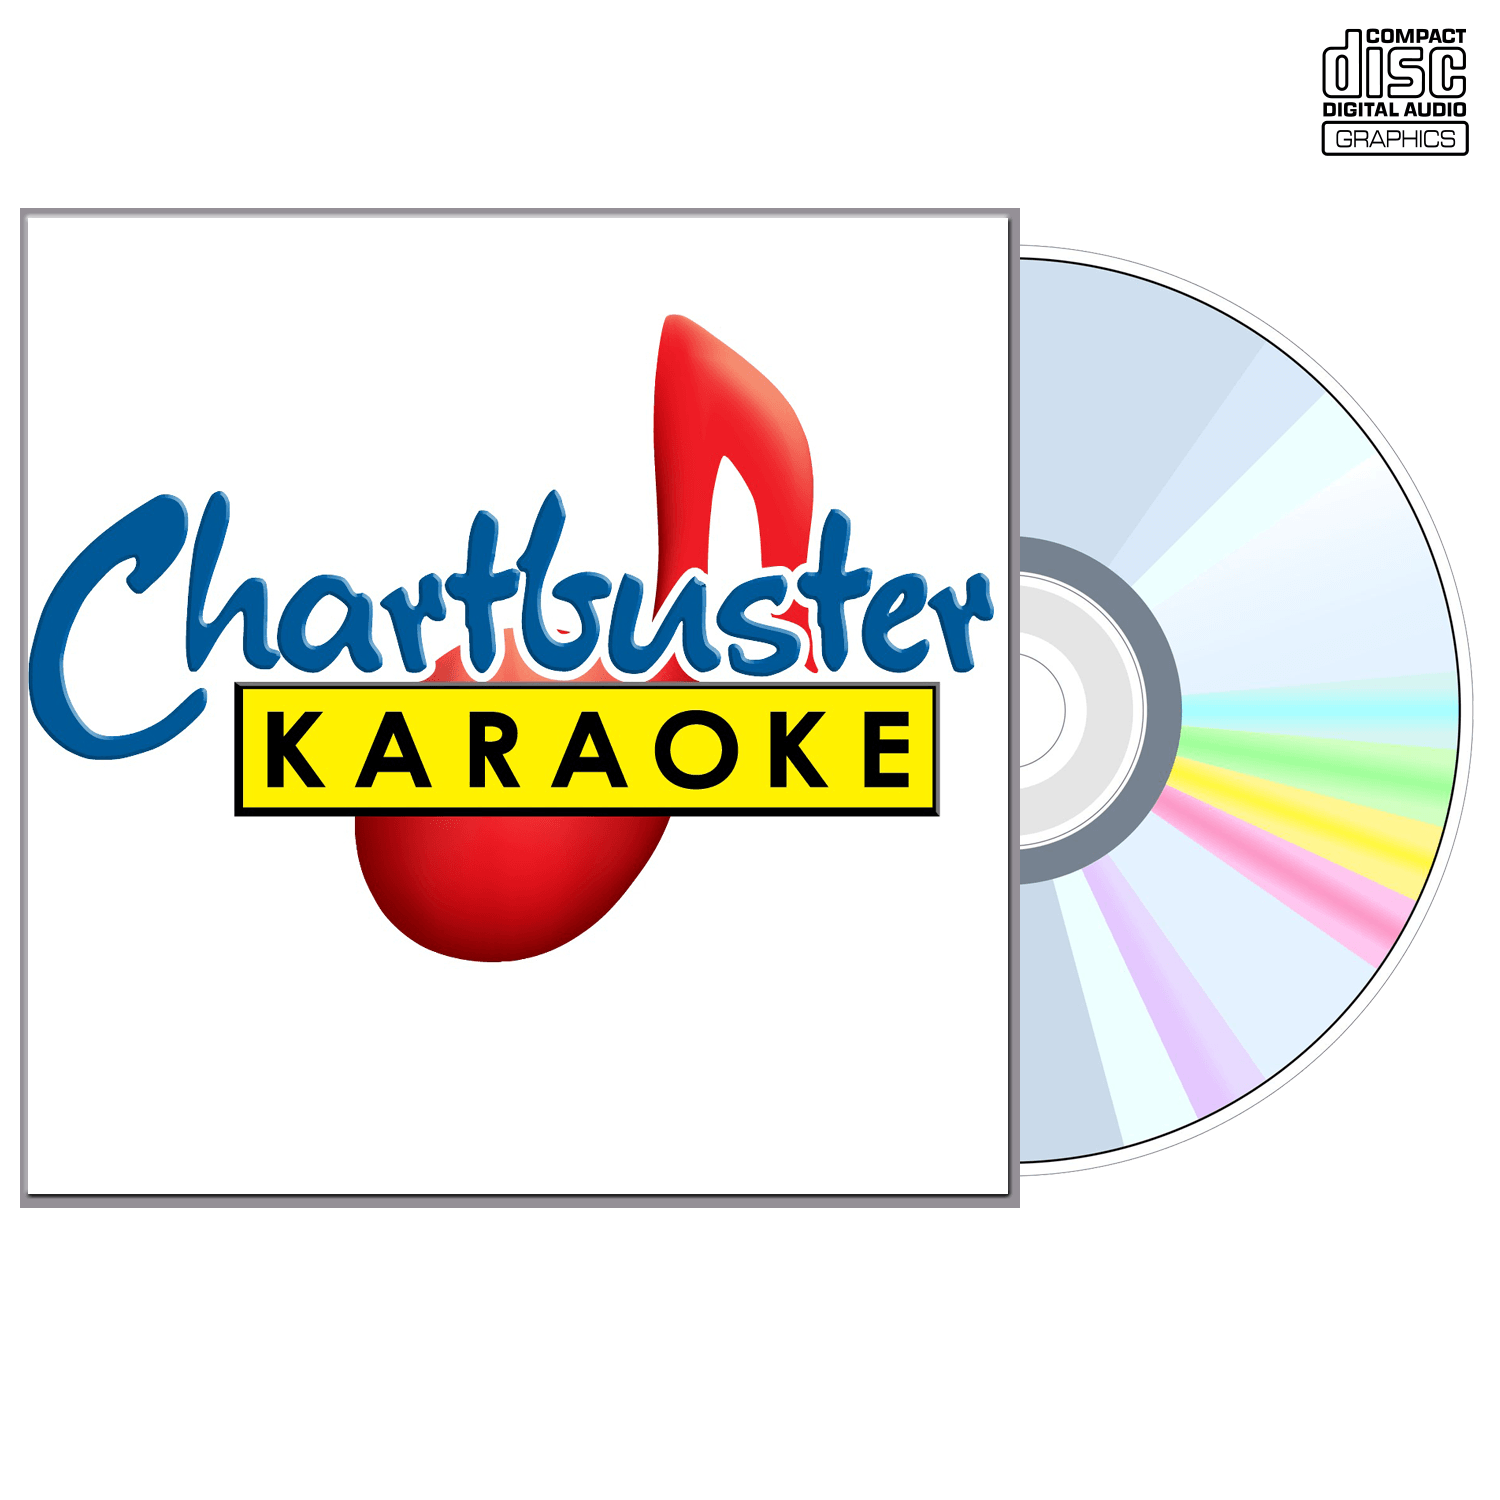 Best Of Frank Sinatra - CD+G - Chartbuster Karaoke - Karaoke Home Entertainment